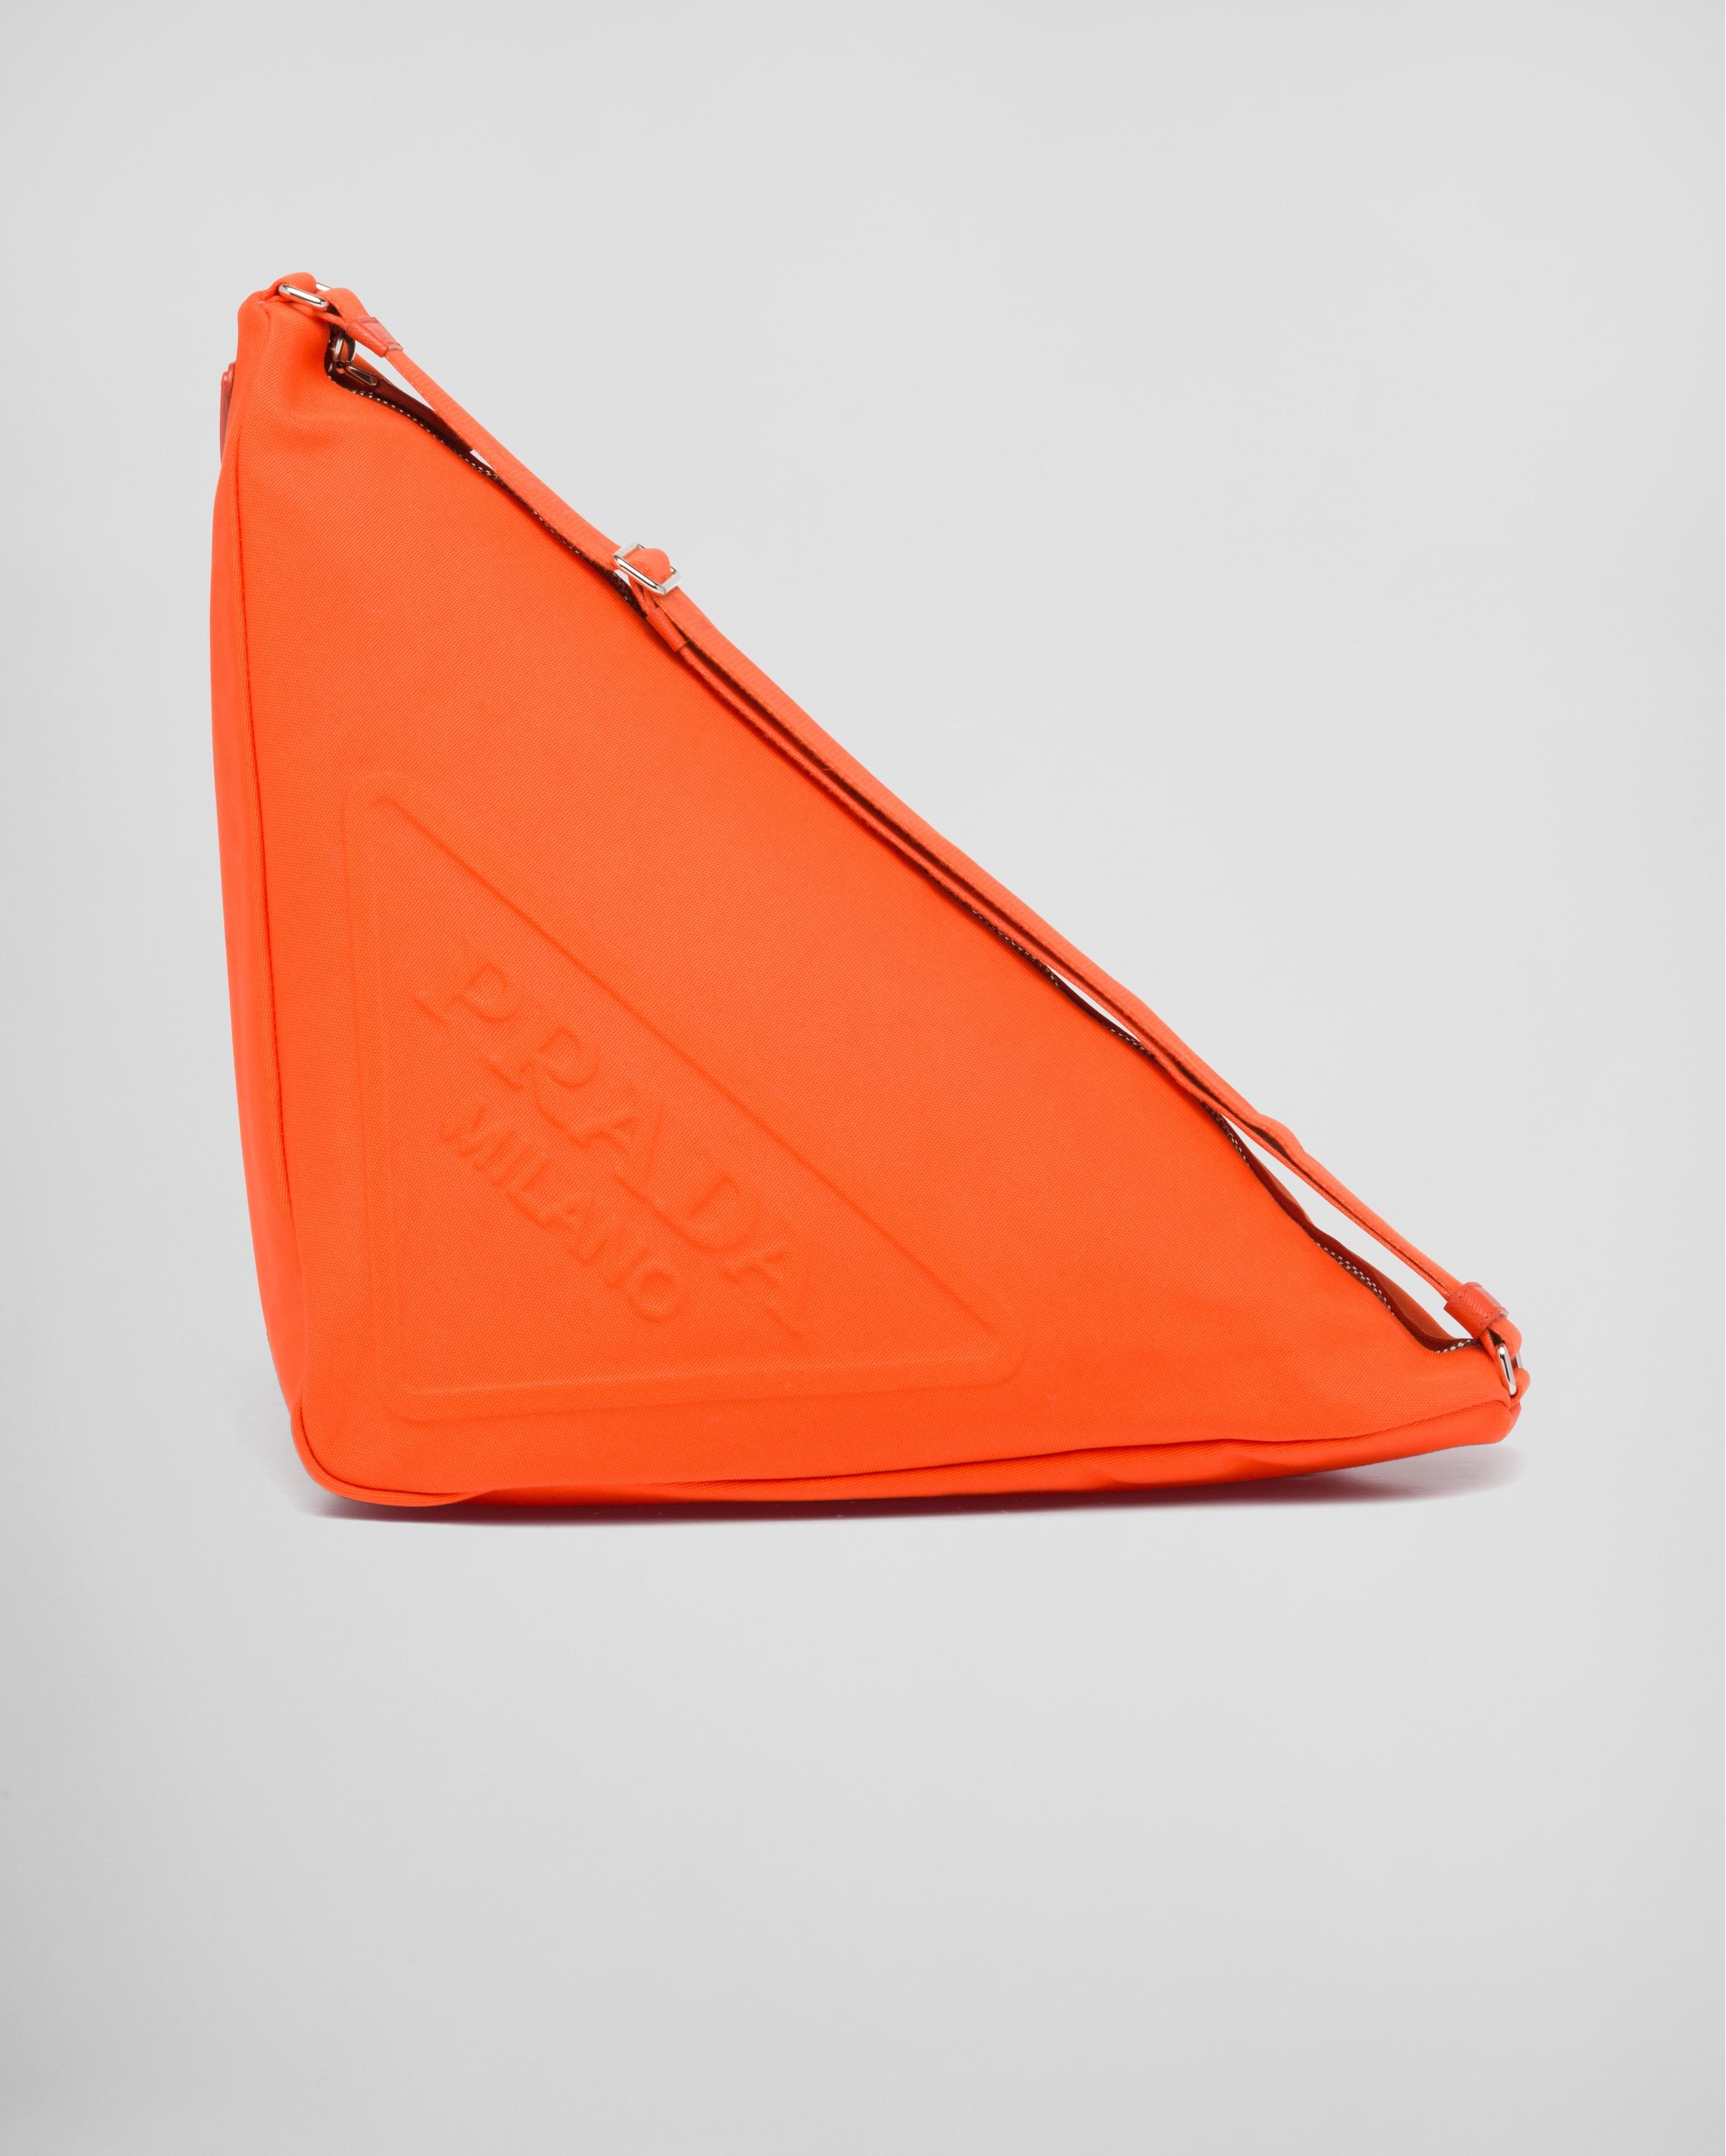 Prada Canvas Triangle Bag in Orange for Men